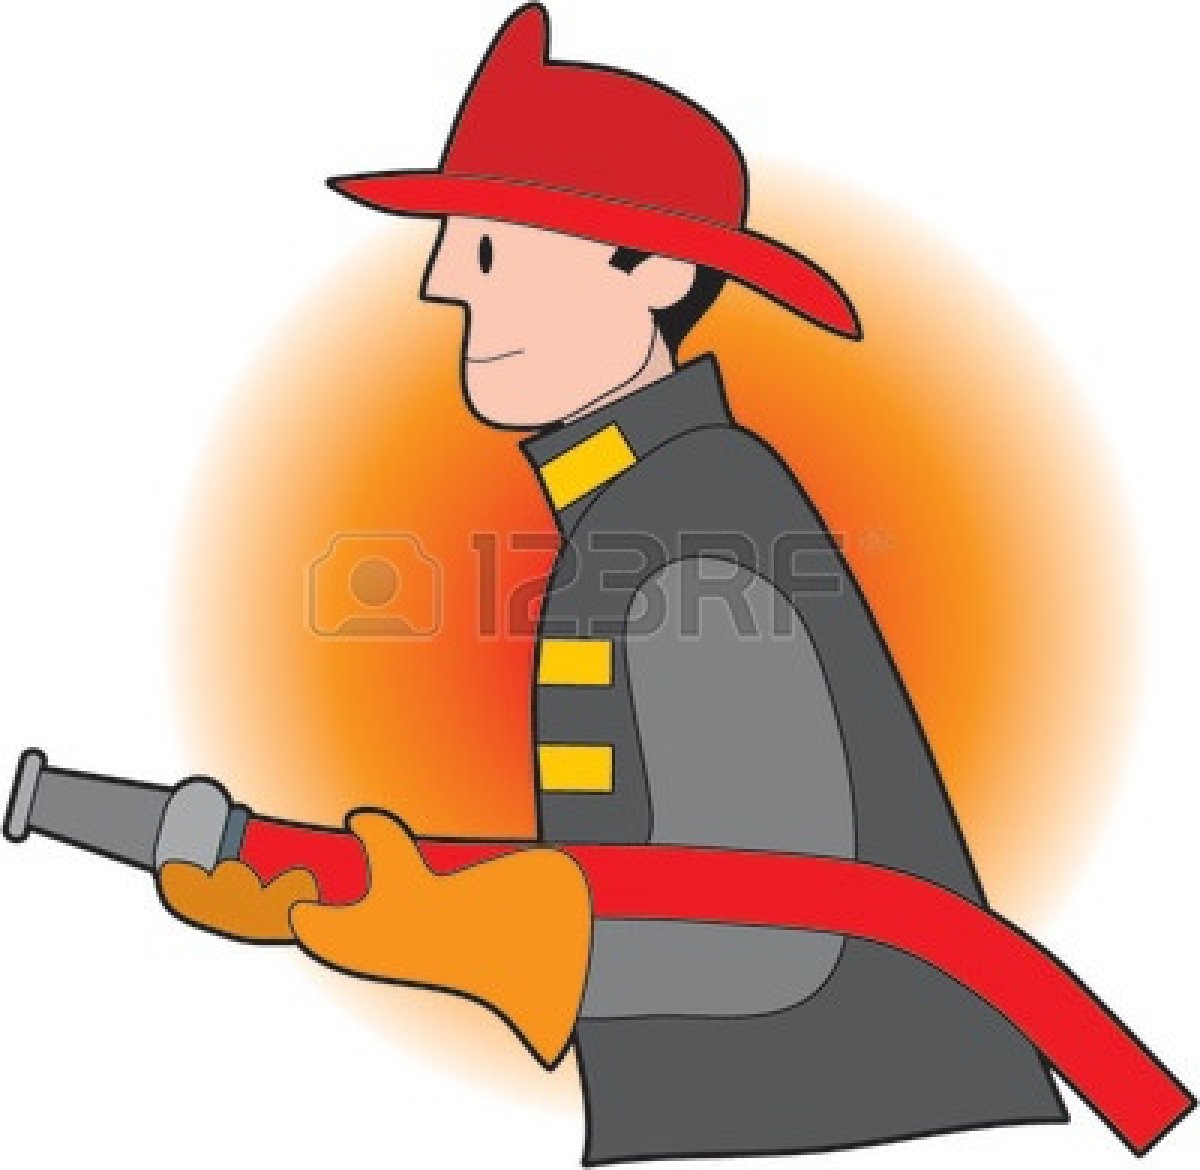 Firefighter Hat Cartoon 964130 Male Firefighter Holding A Fire Hose